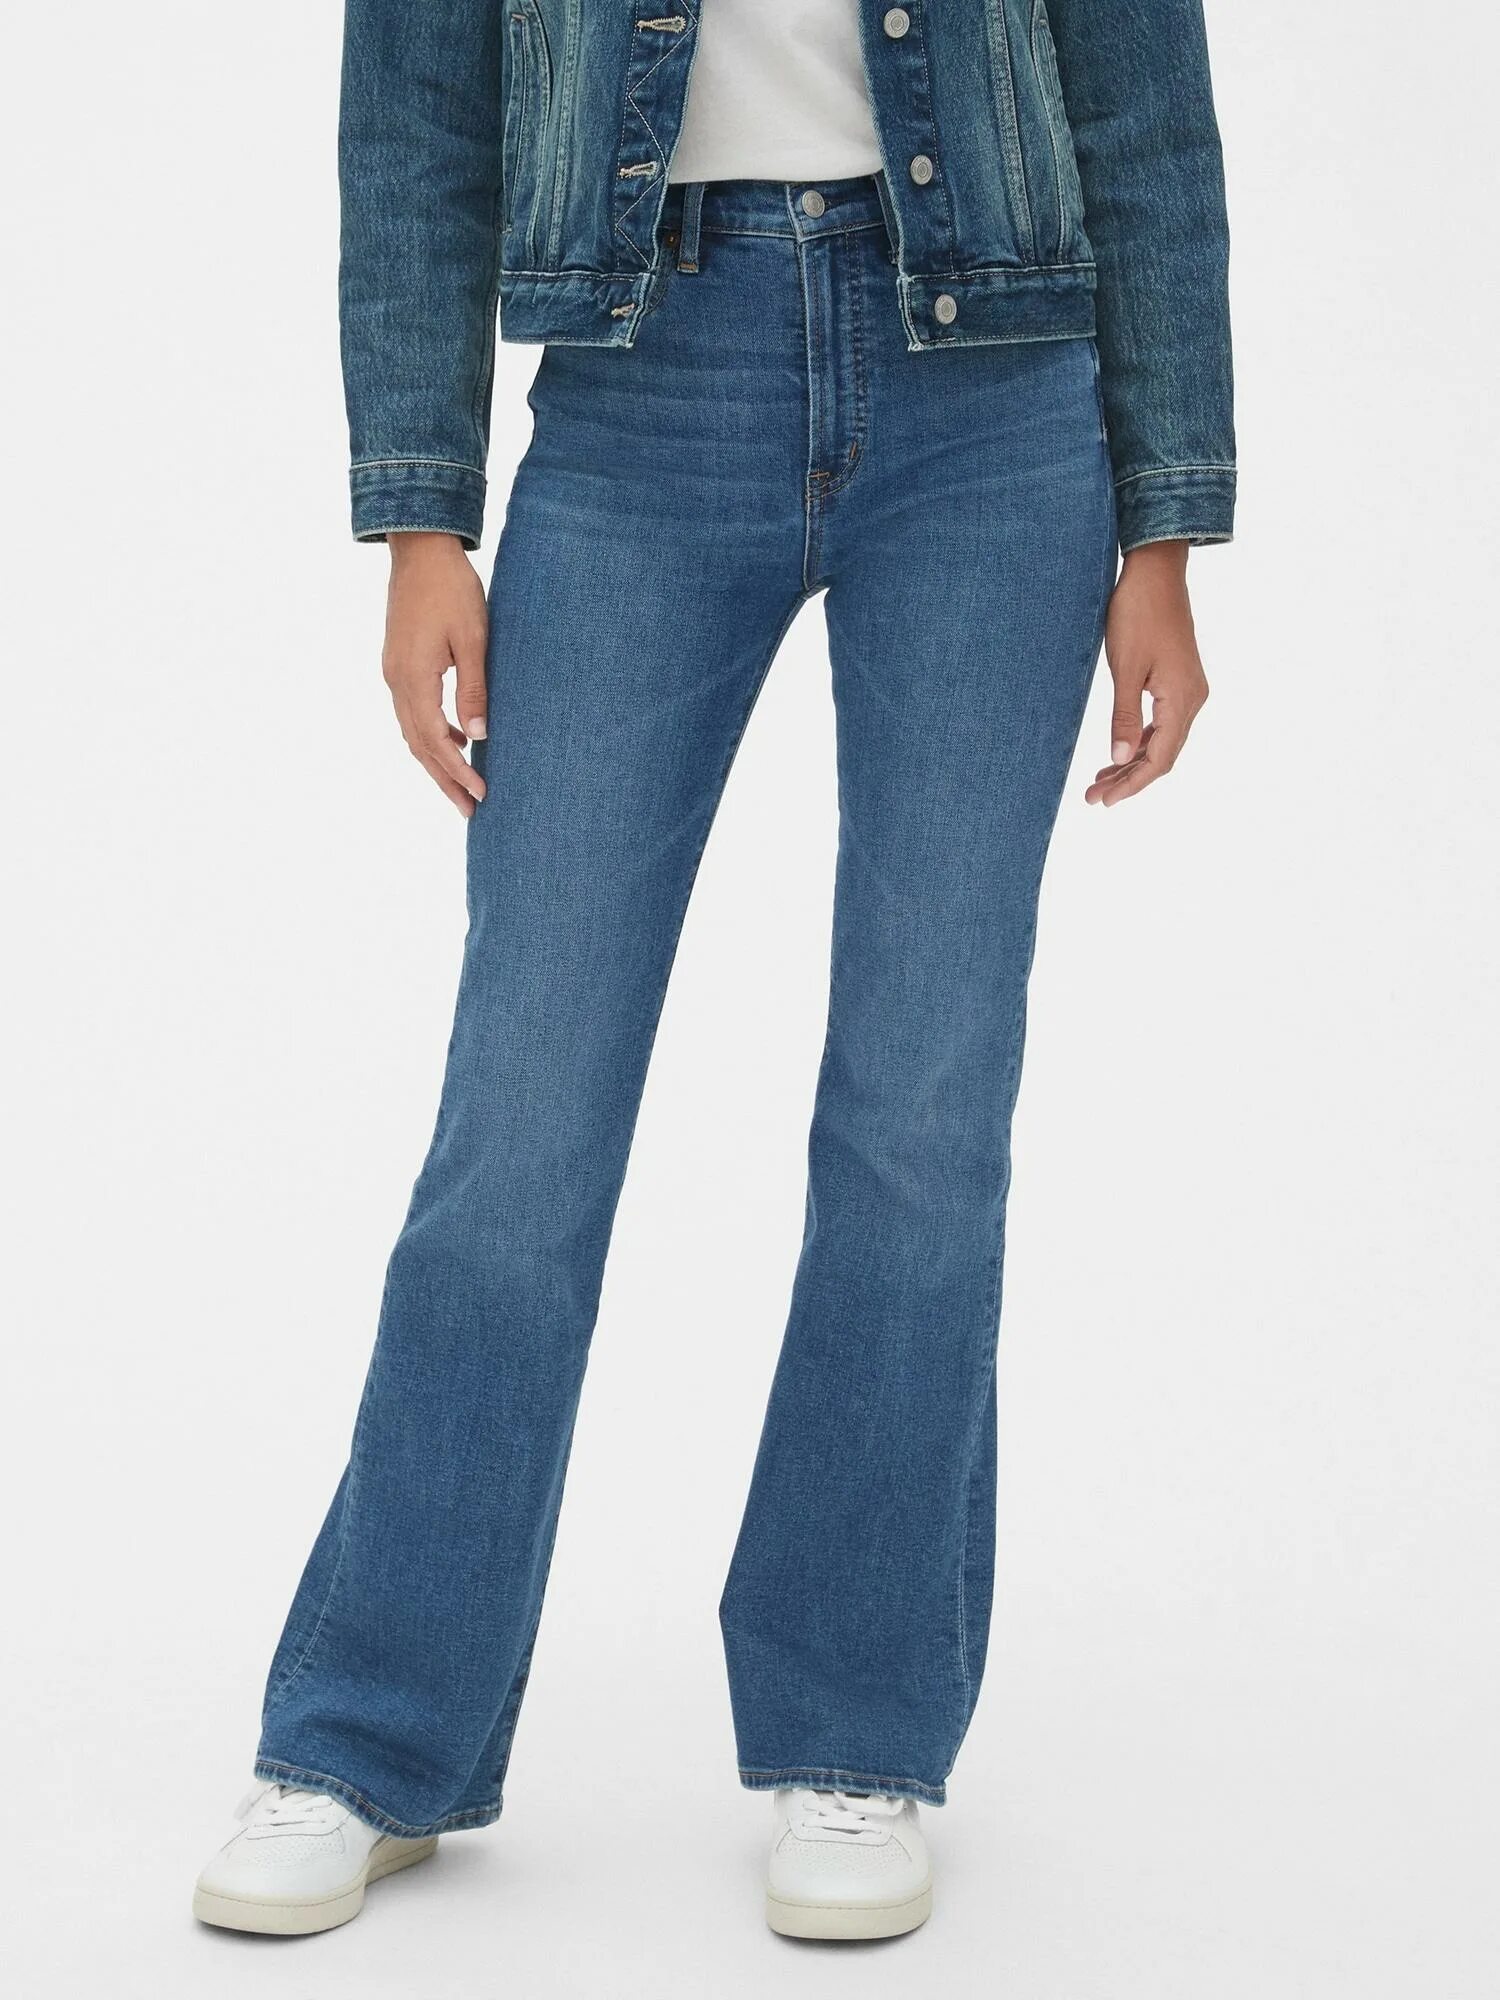 70s High Flare джинсы Step. Gap Crop Flare Jeans. Gap 70s Flare джинсы клеш. 70 High Flare Jeans. Джинсы флаер